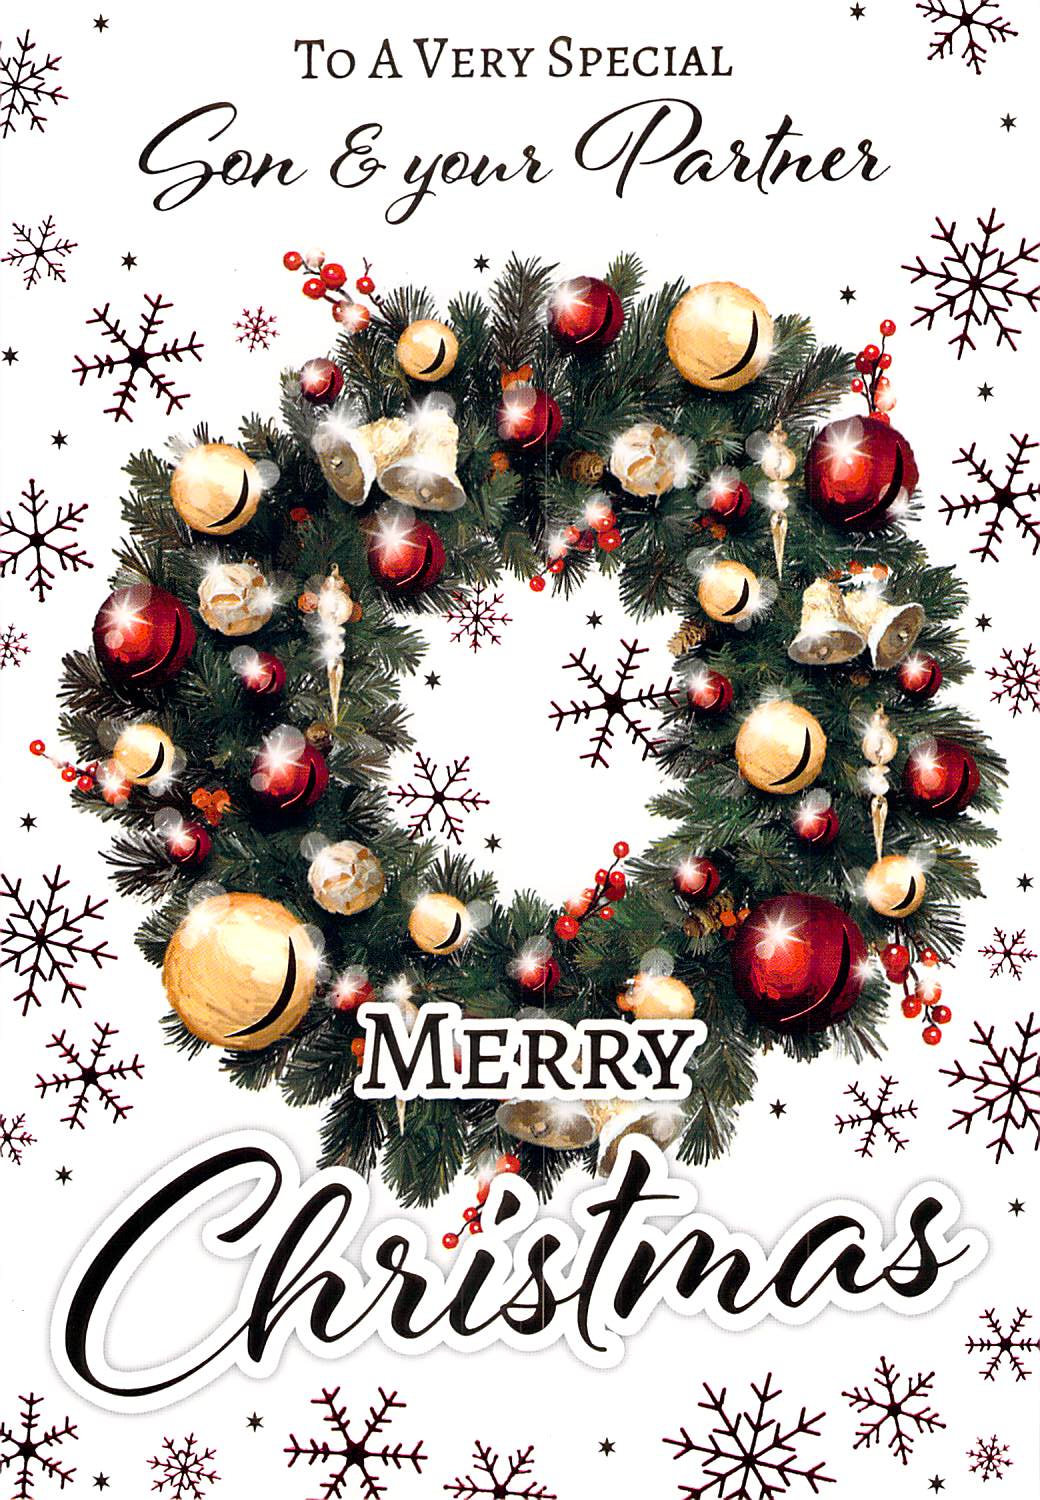 Christmas - Son & Partner -Wreath -  Greeting Card